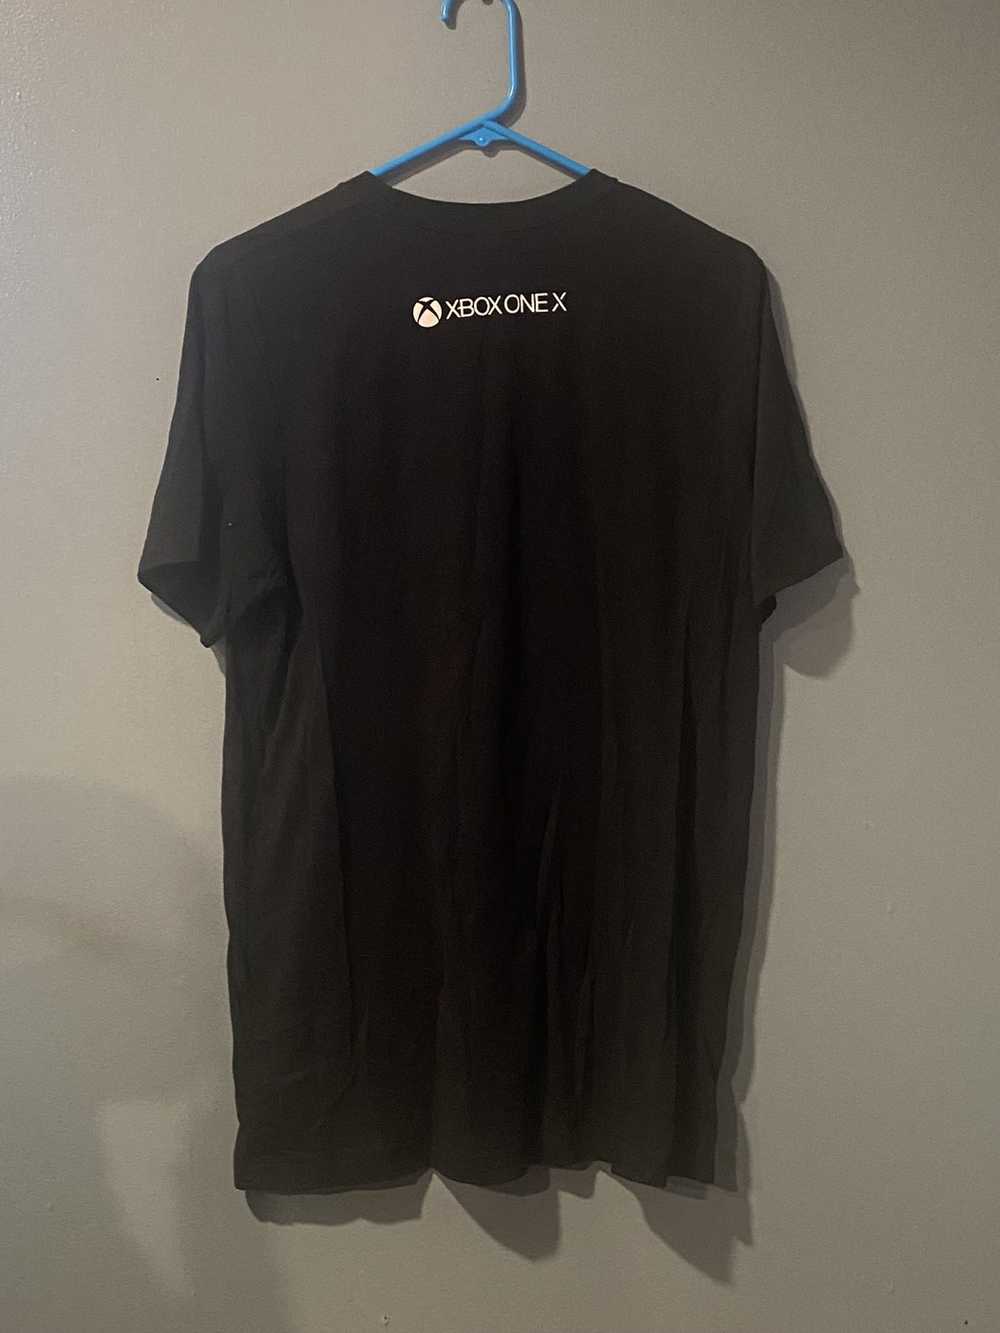 Rare × Xbox 360 Rare Xbox Employee Shirt with Xbo… - image 2